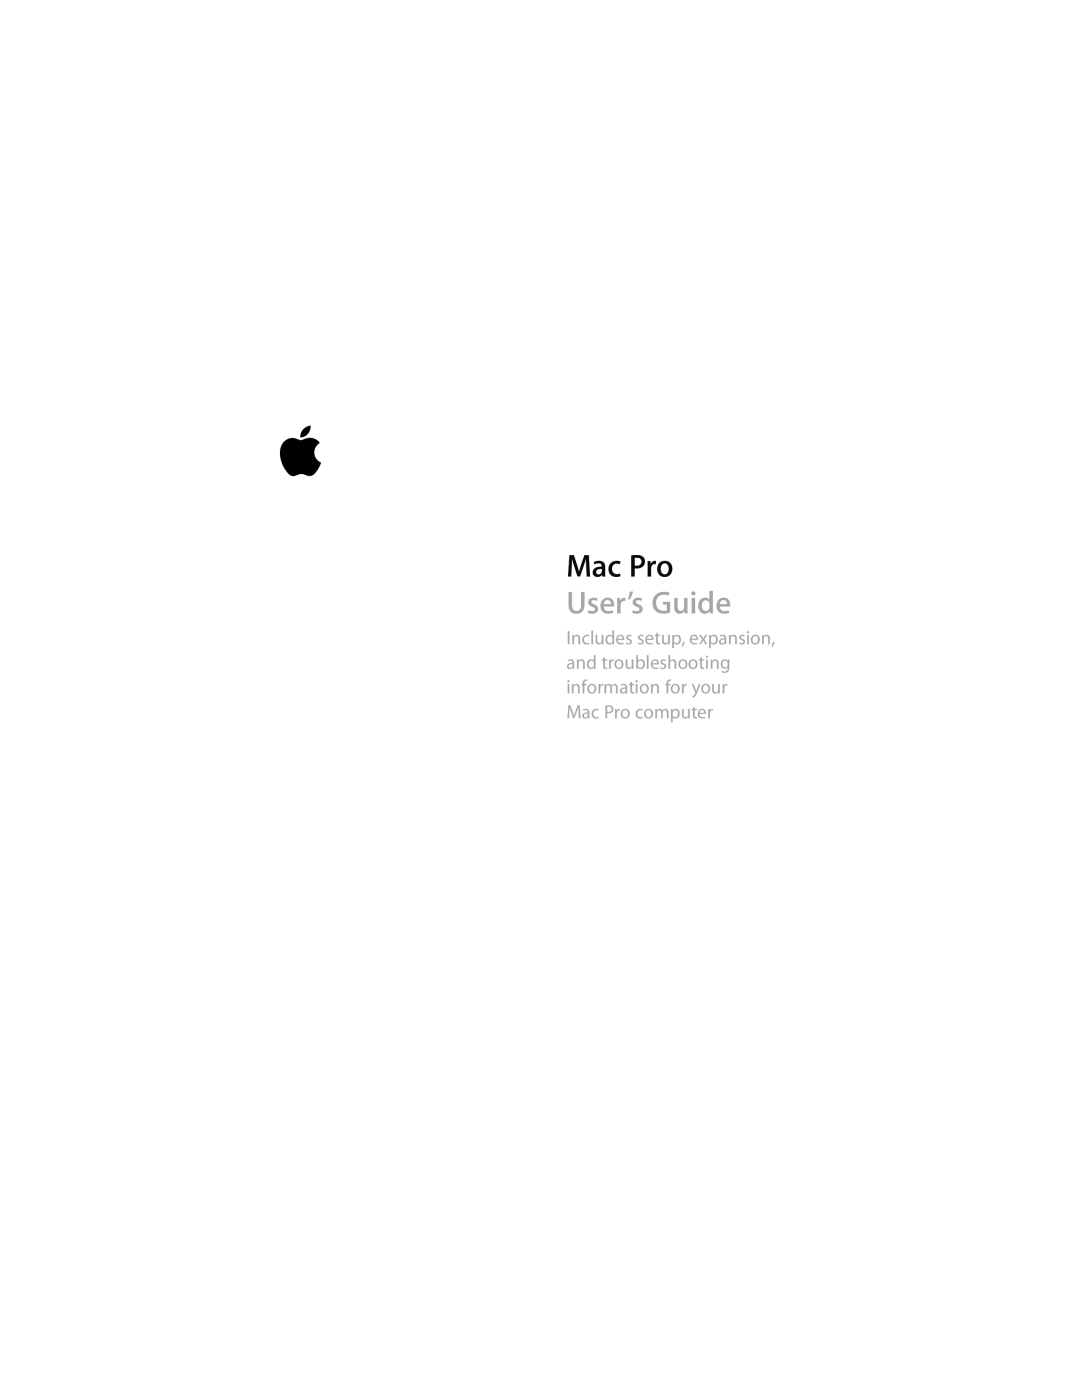 Asus MA356*/A manual User’s Guide, Mac Pro computer 